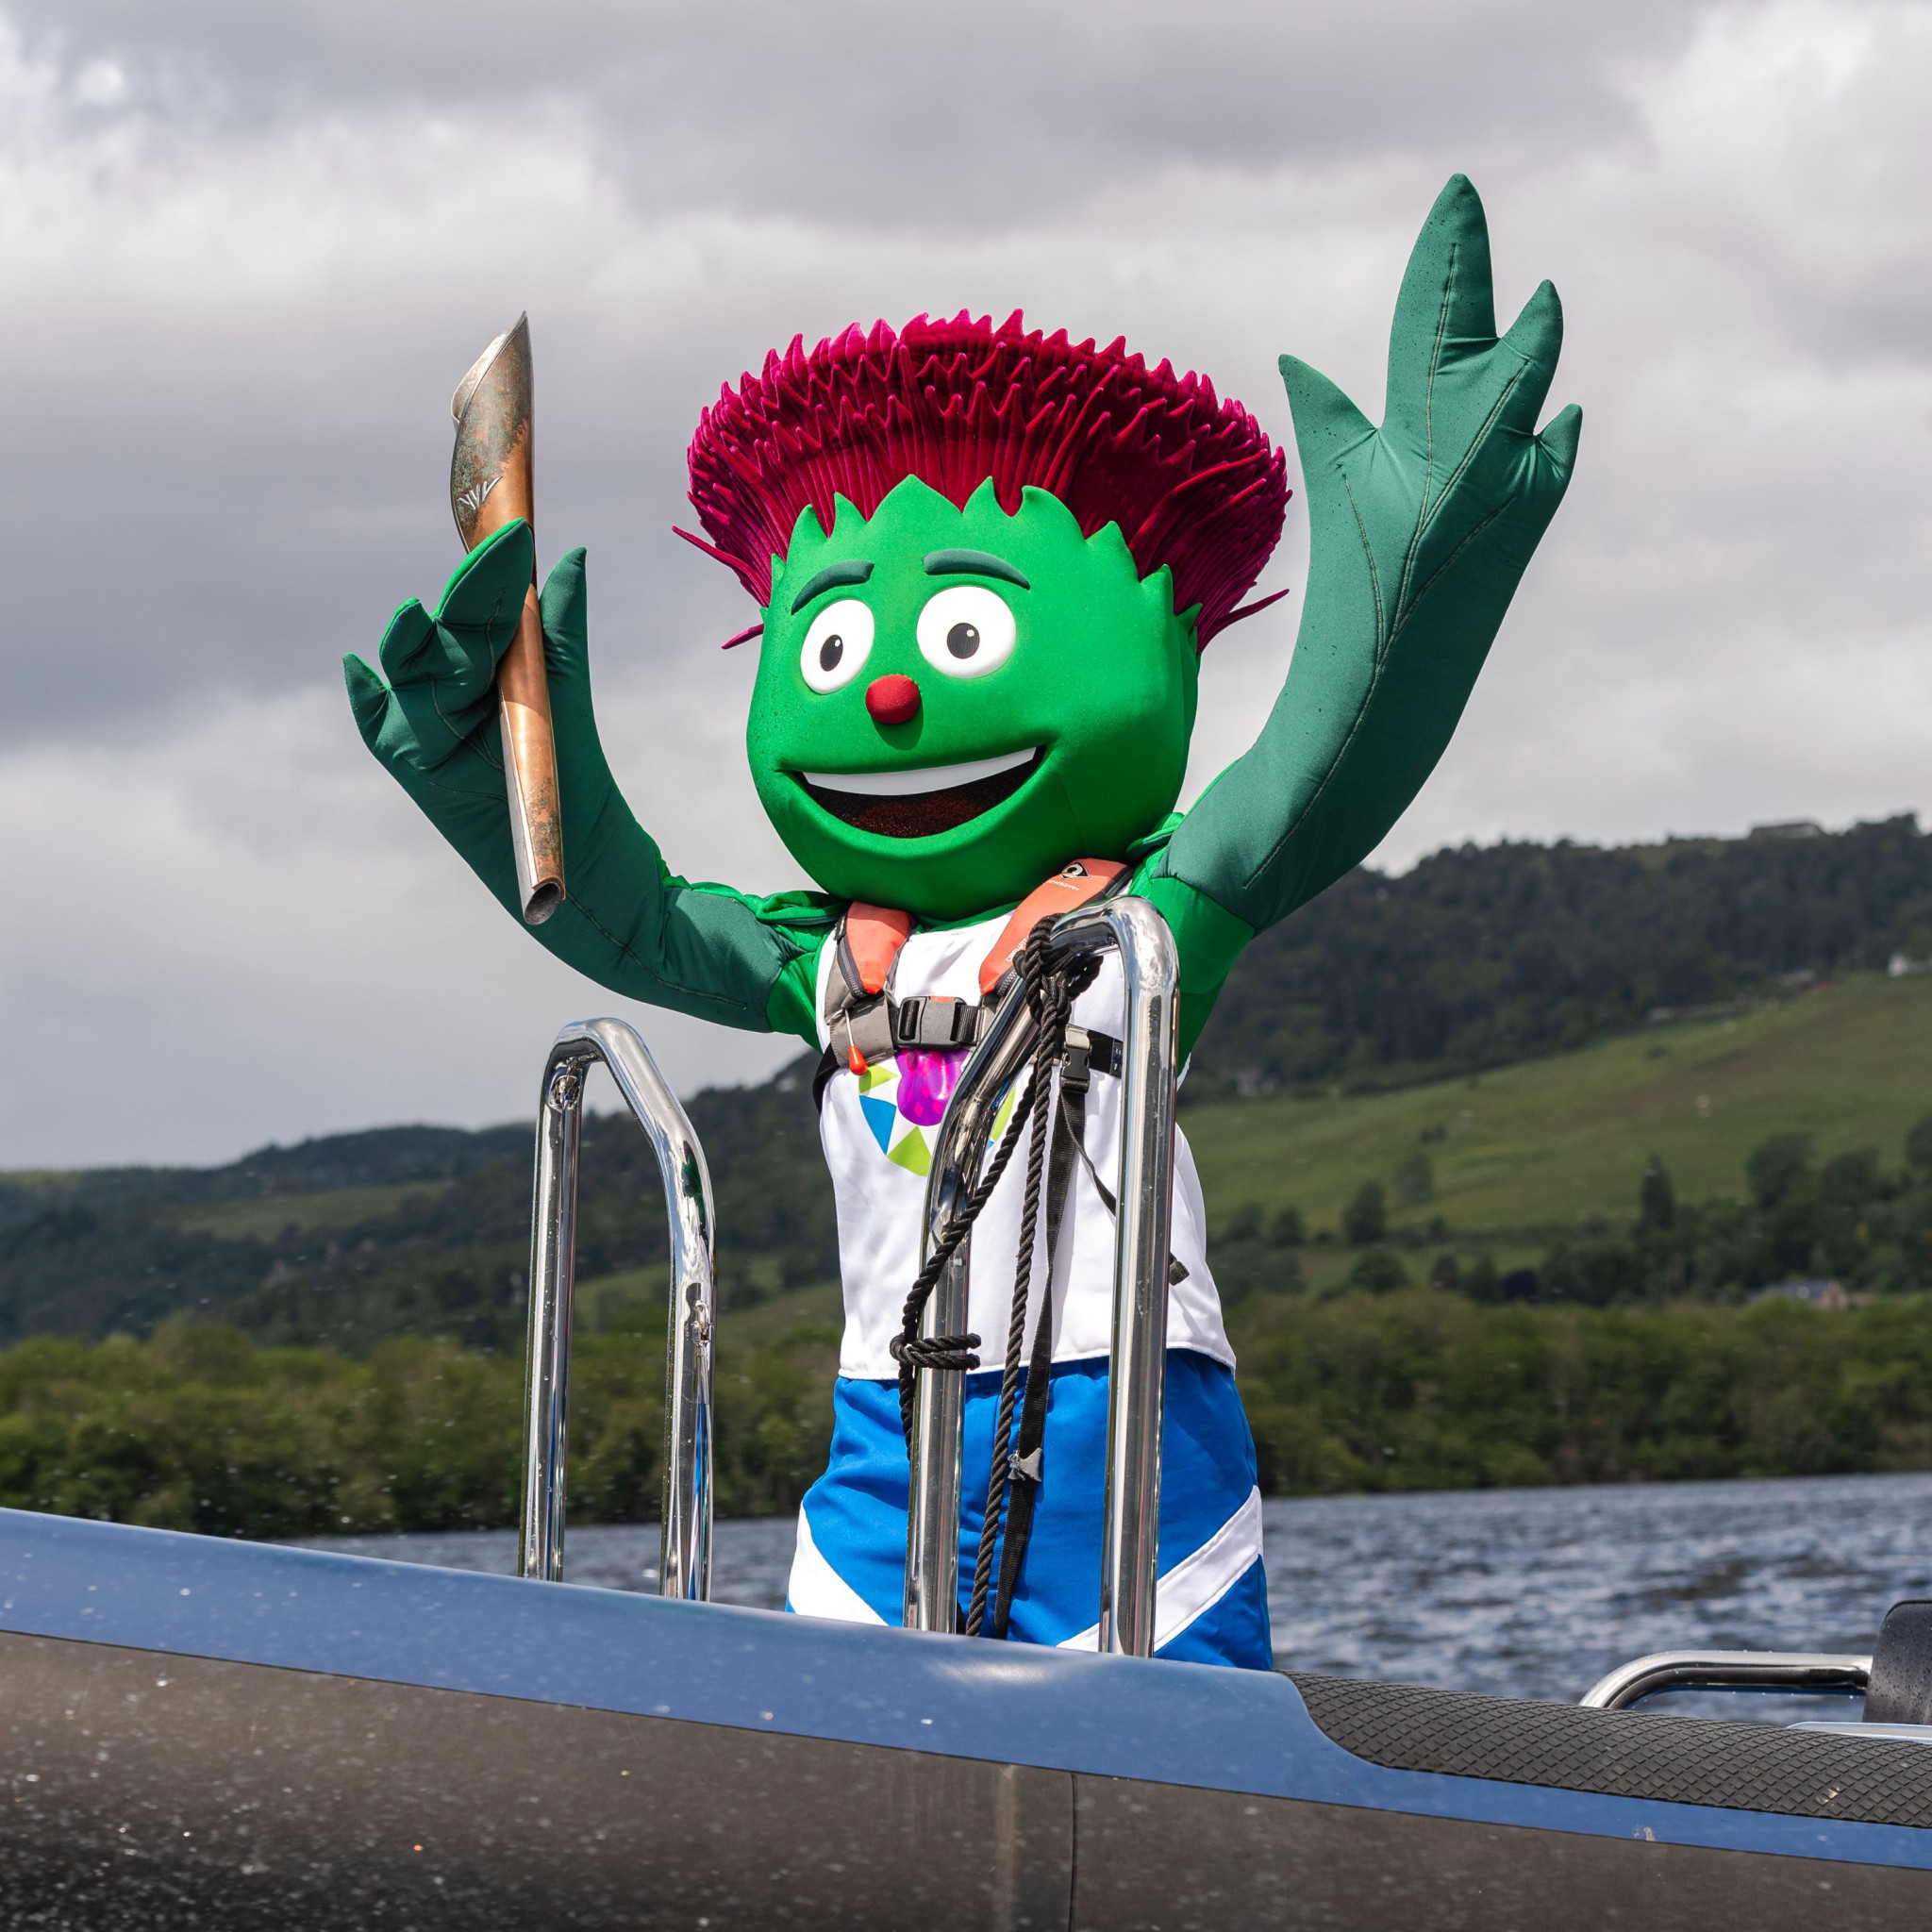 Glasgow 2014 mascot Clyde carried the Baton across Loch Ness ©Team Scotland